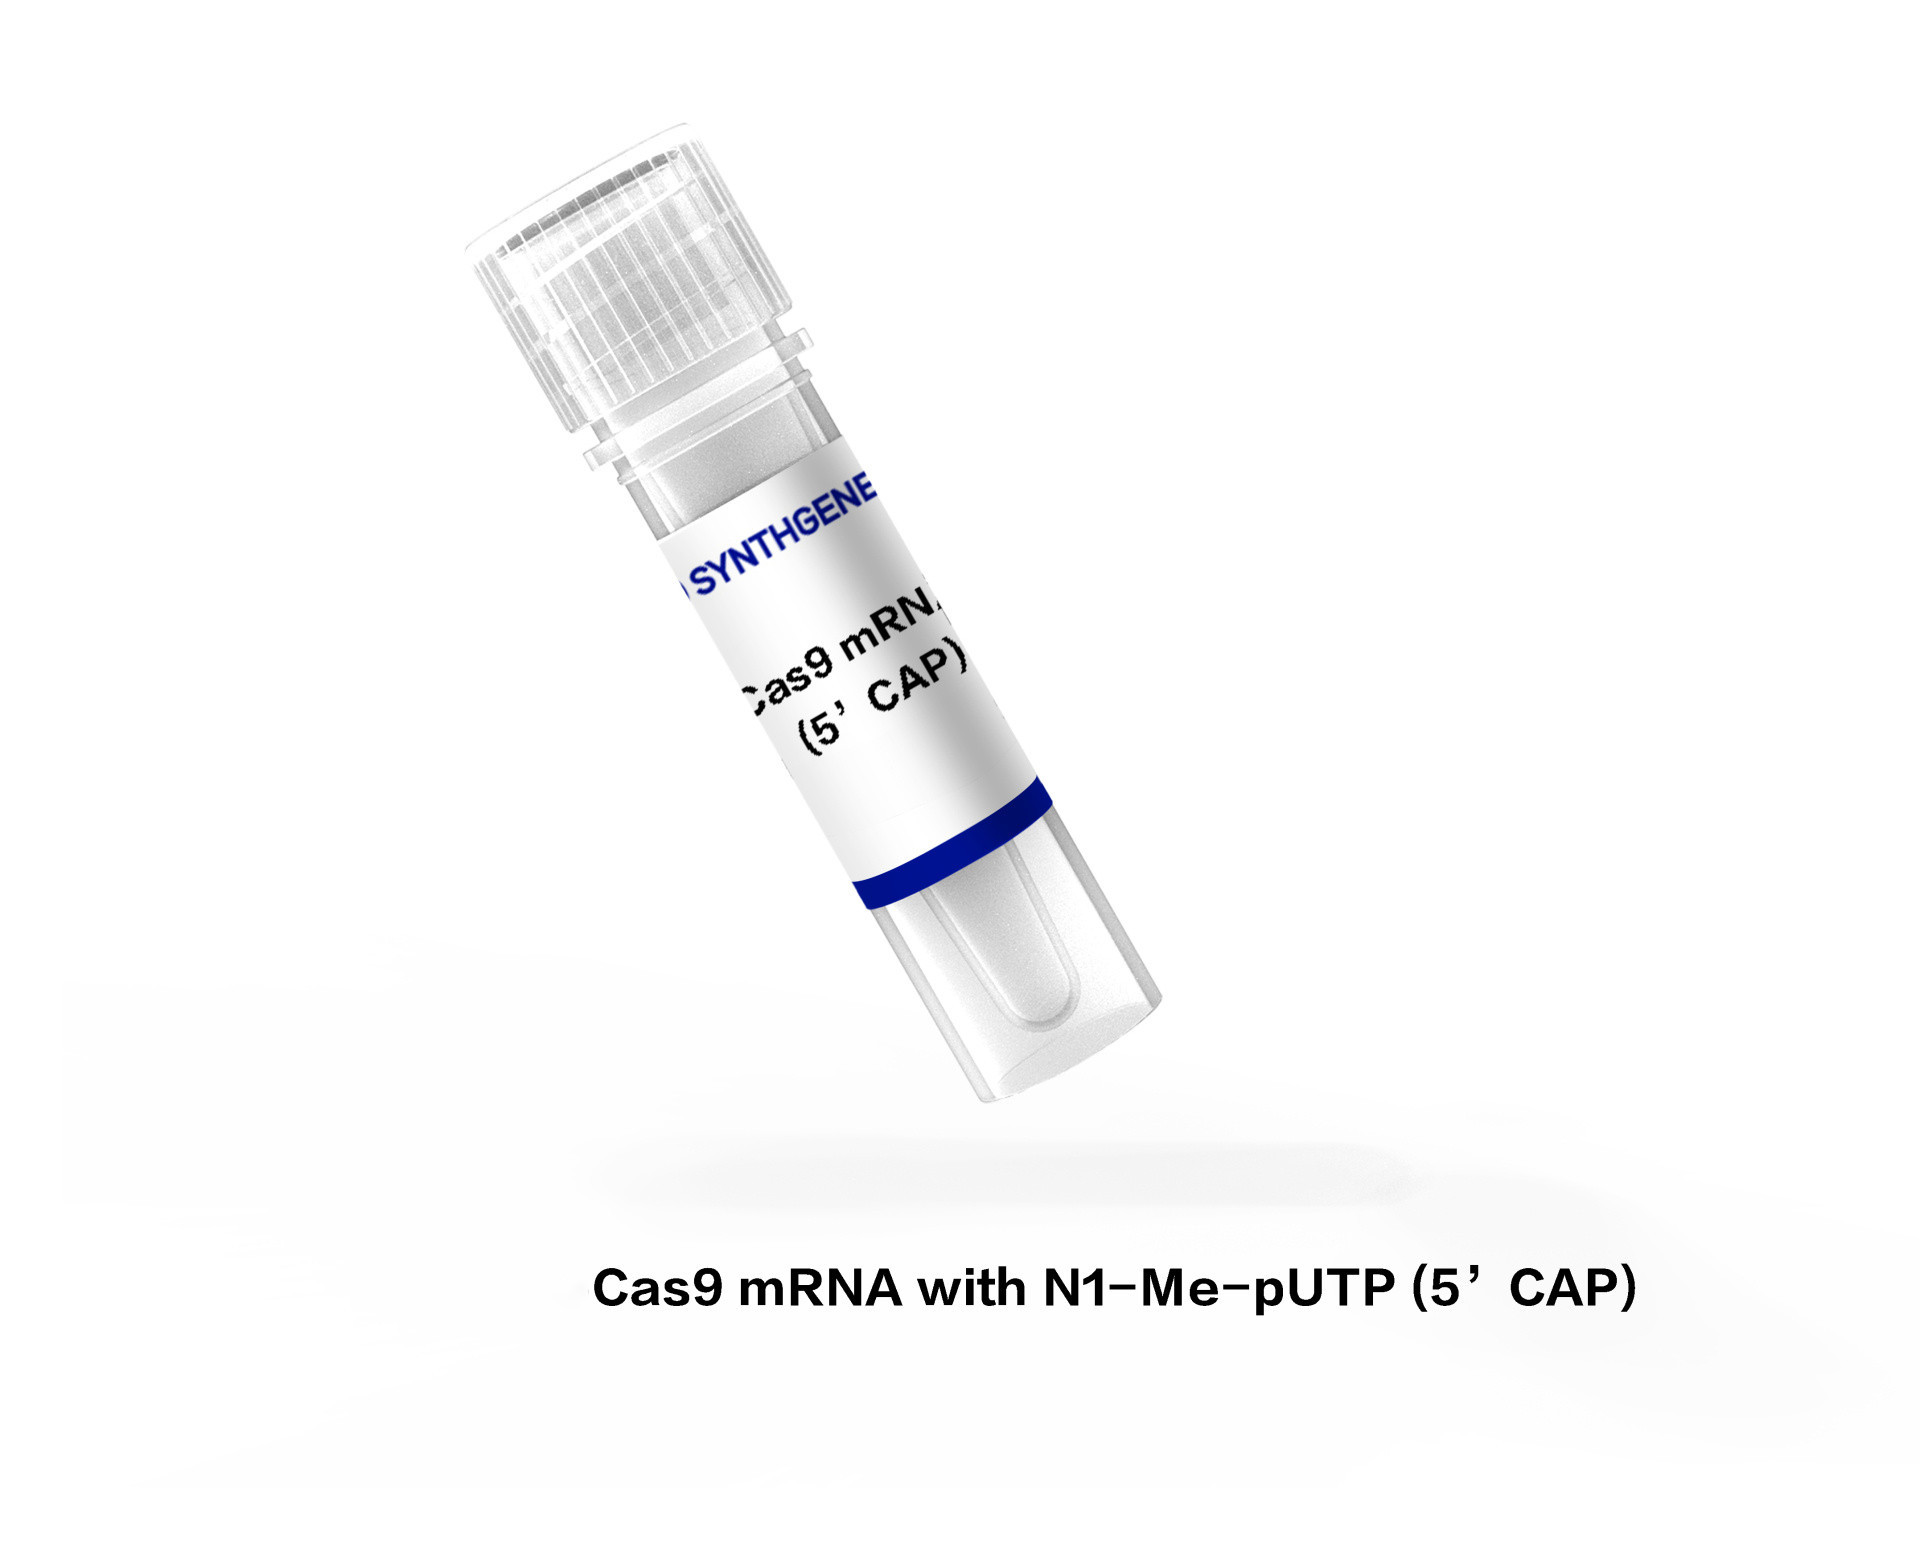 Cas9 mRNA with N1-Me-pUTP (5’CAP)